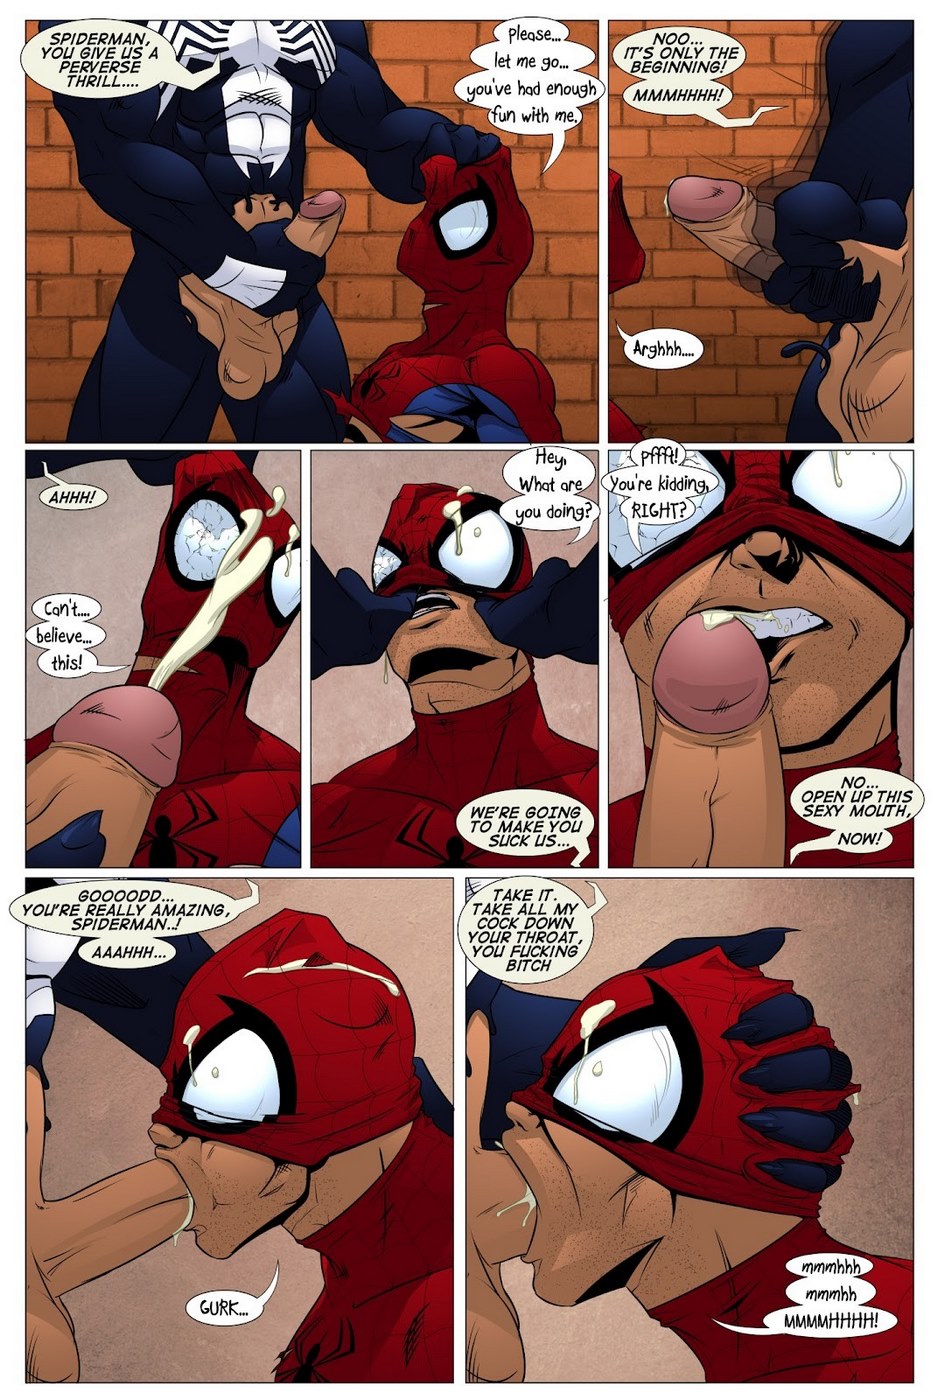 Amazing Spider Man Gay Porn - Shooters (Spider-Man Venom) - Porn Cartoon Comics